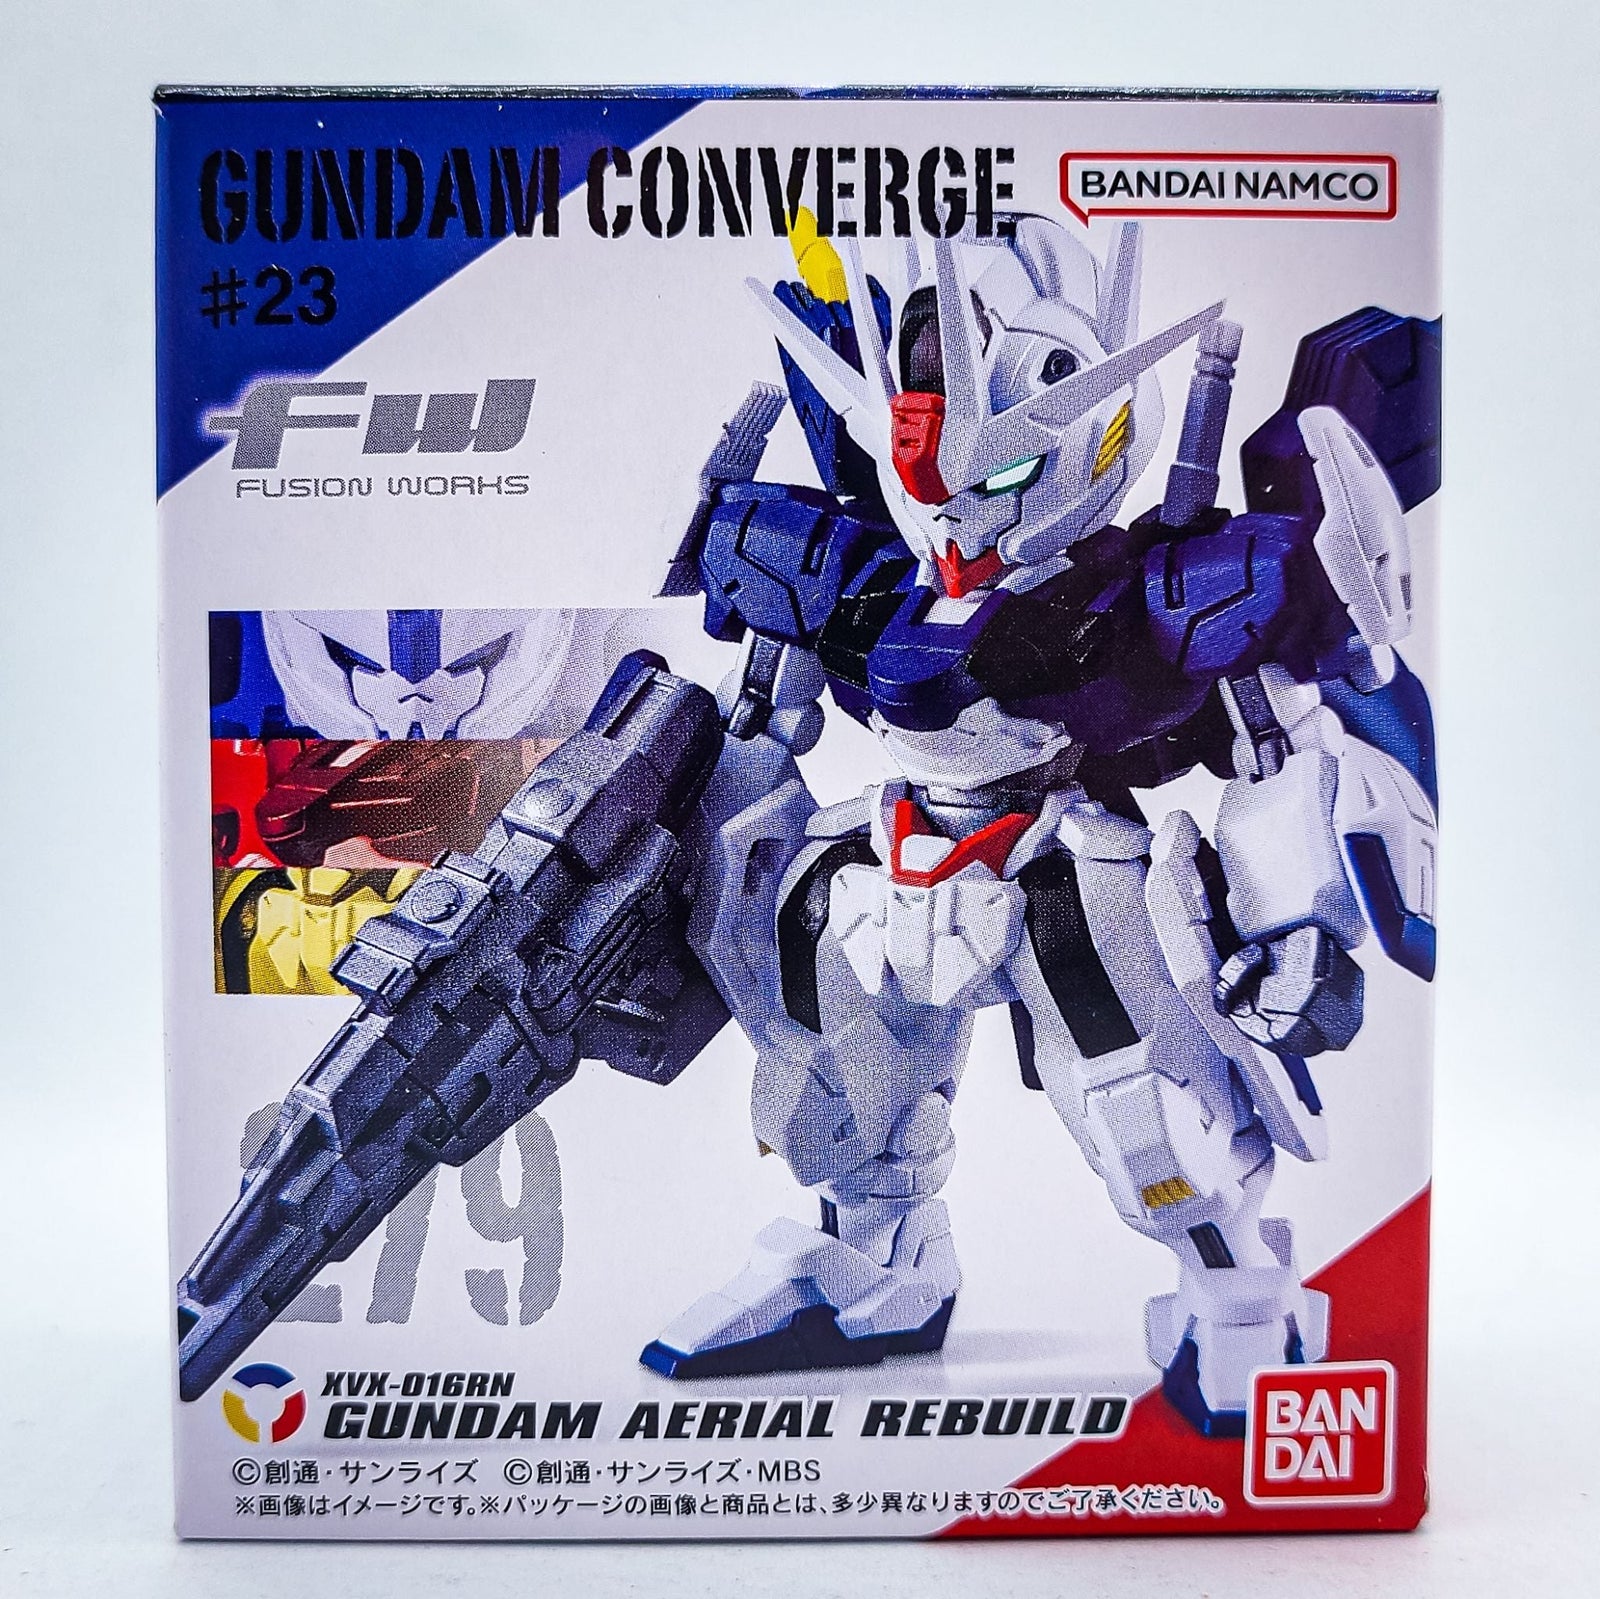 Gundam Converge #279 Gundam Aerial Rebuild by Bandai - 1